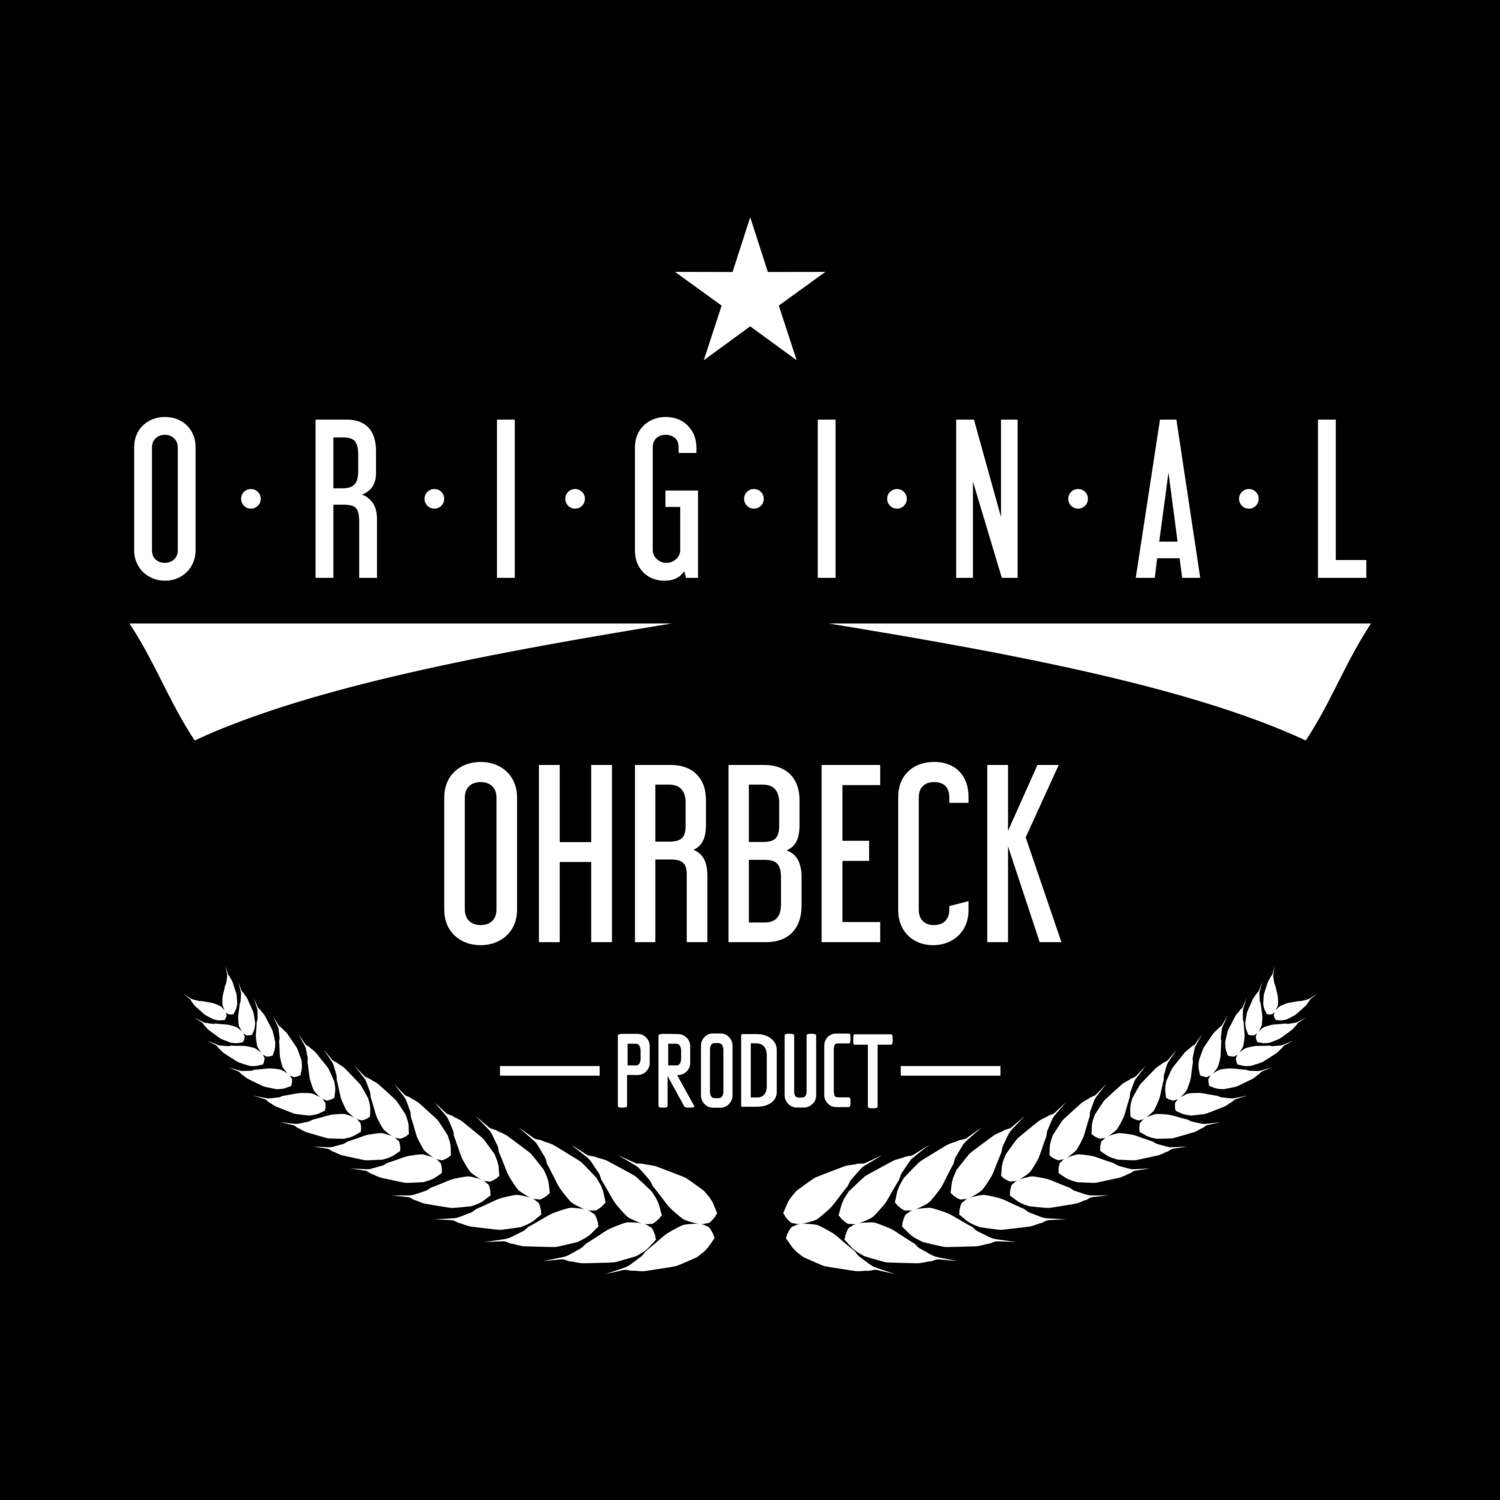 Ohrbeck T-Shirt »Original Product«